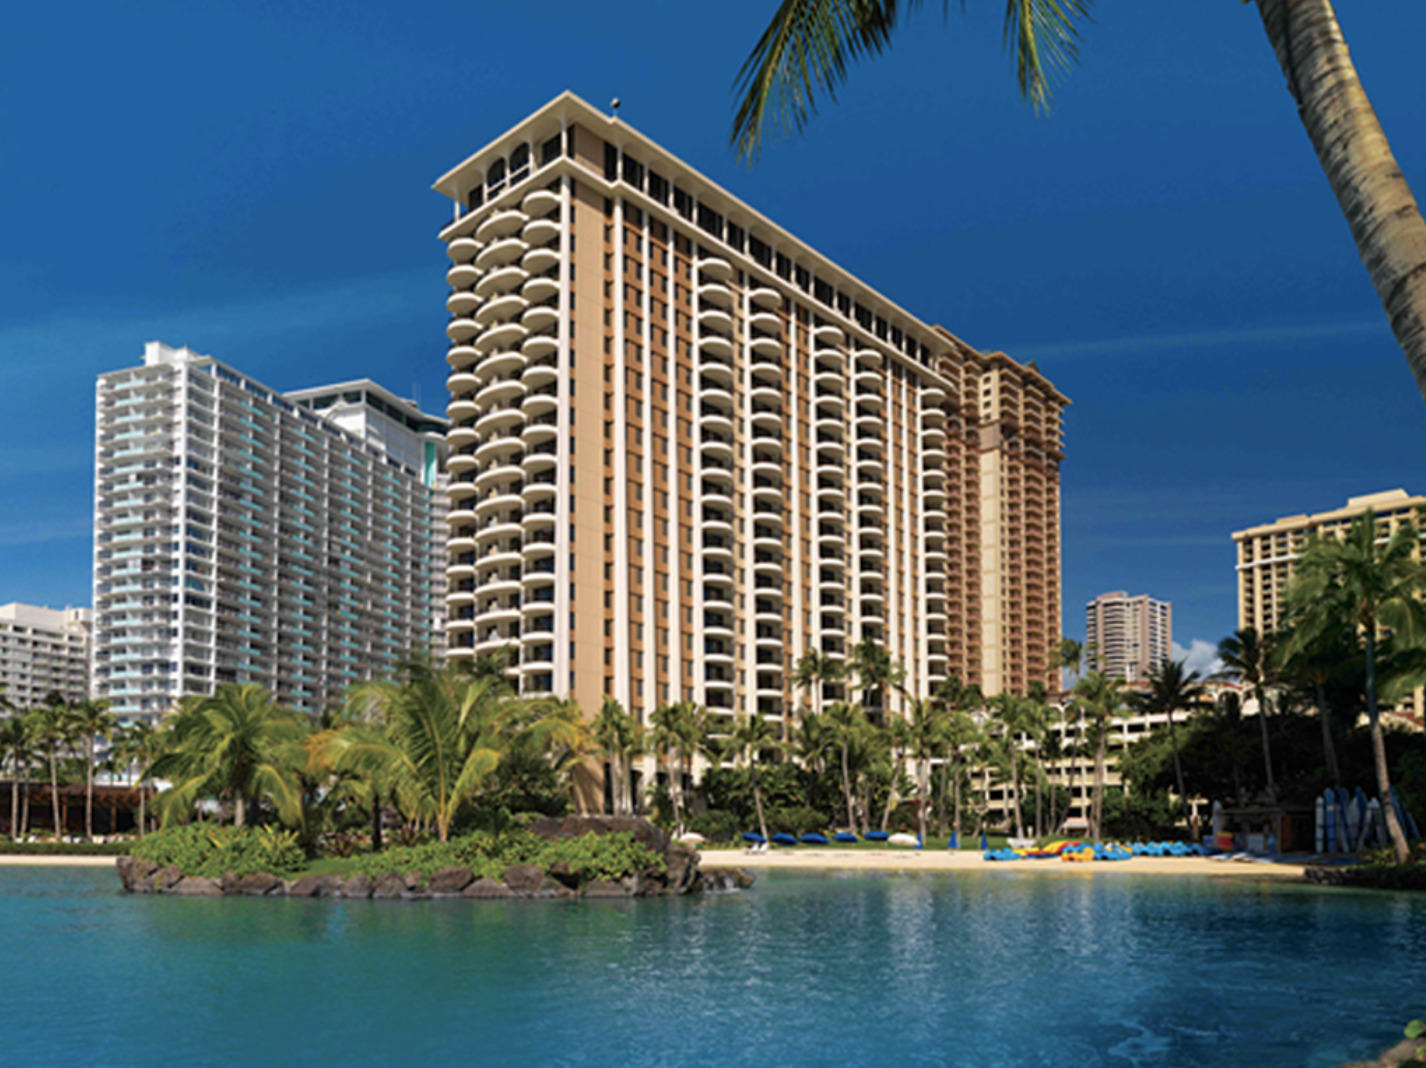 Hilton Grand Vacations Club Hgvc At The Lagoon Tower Redweek